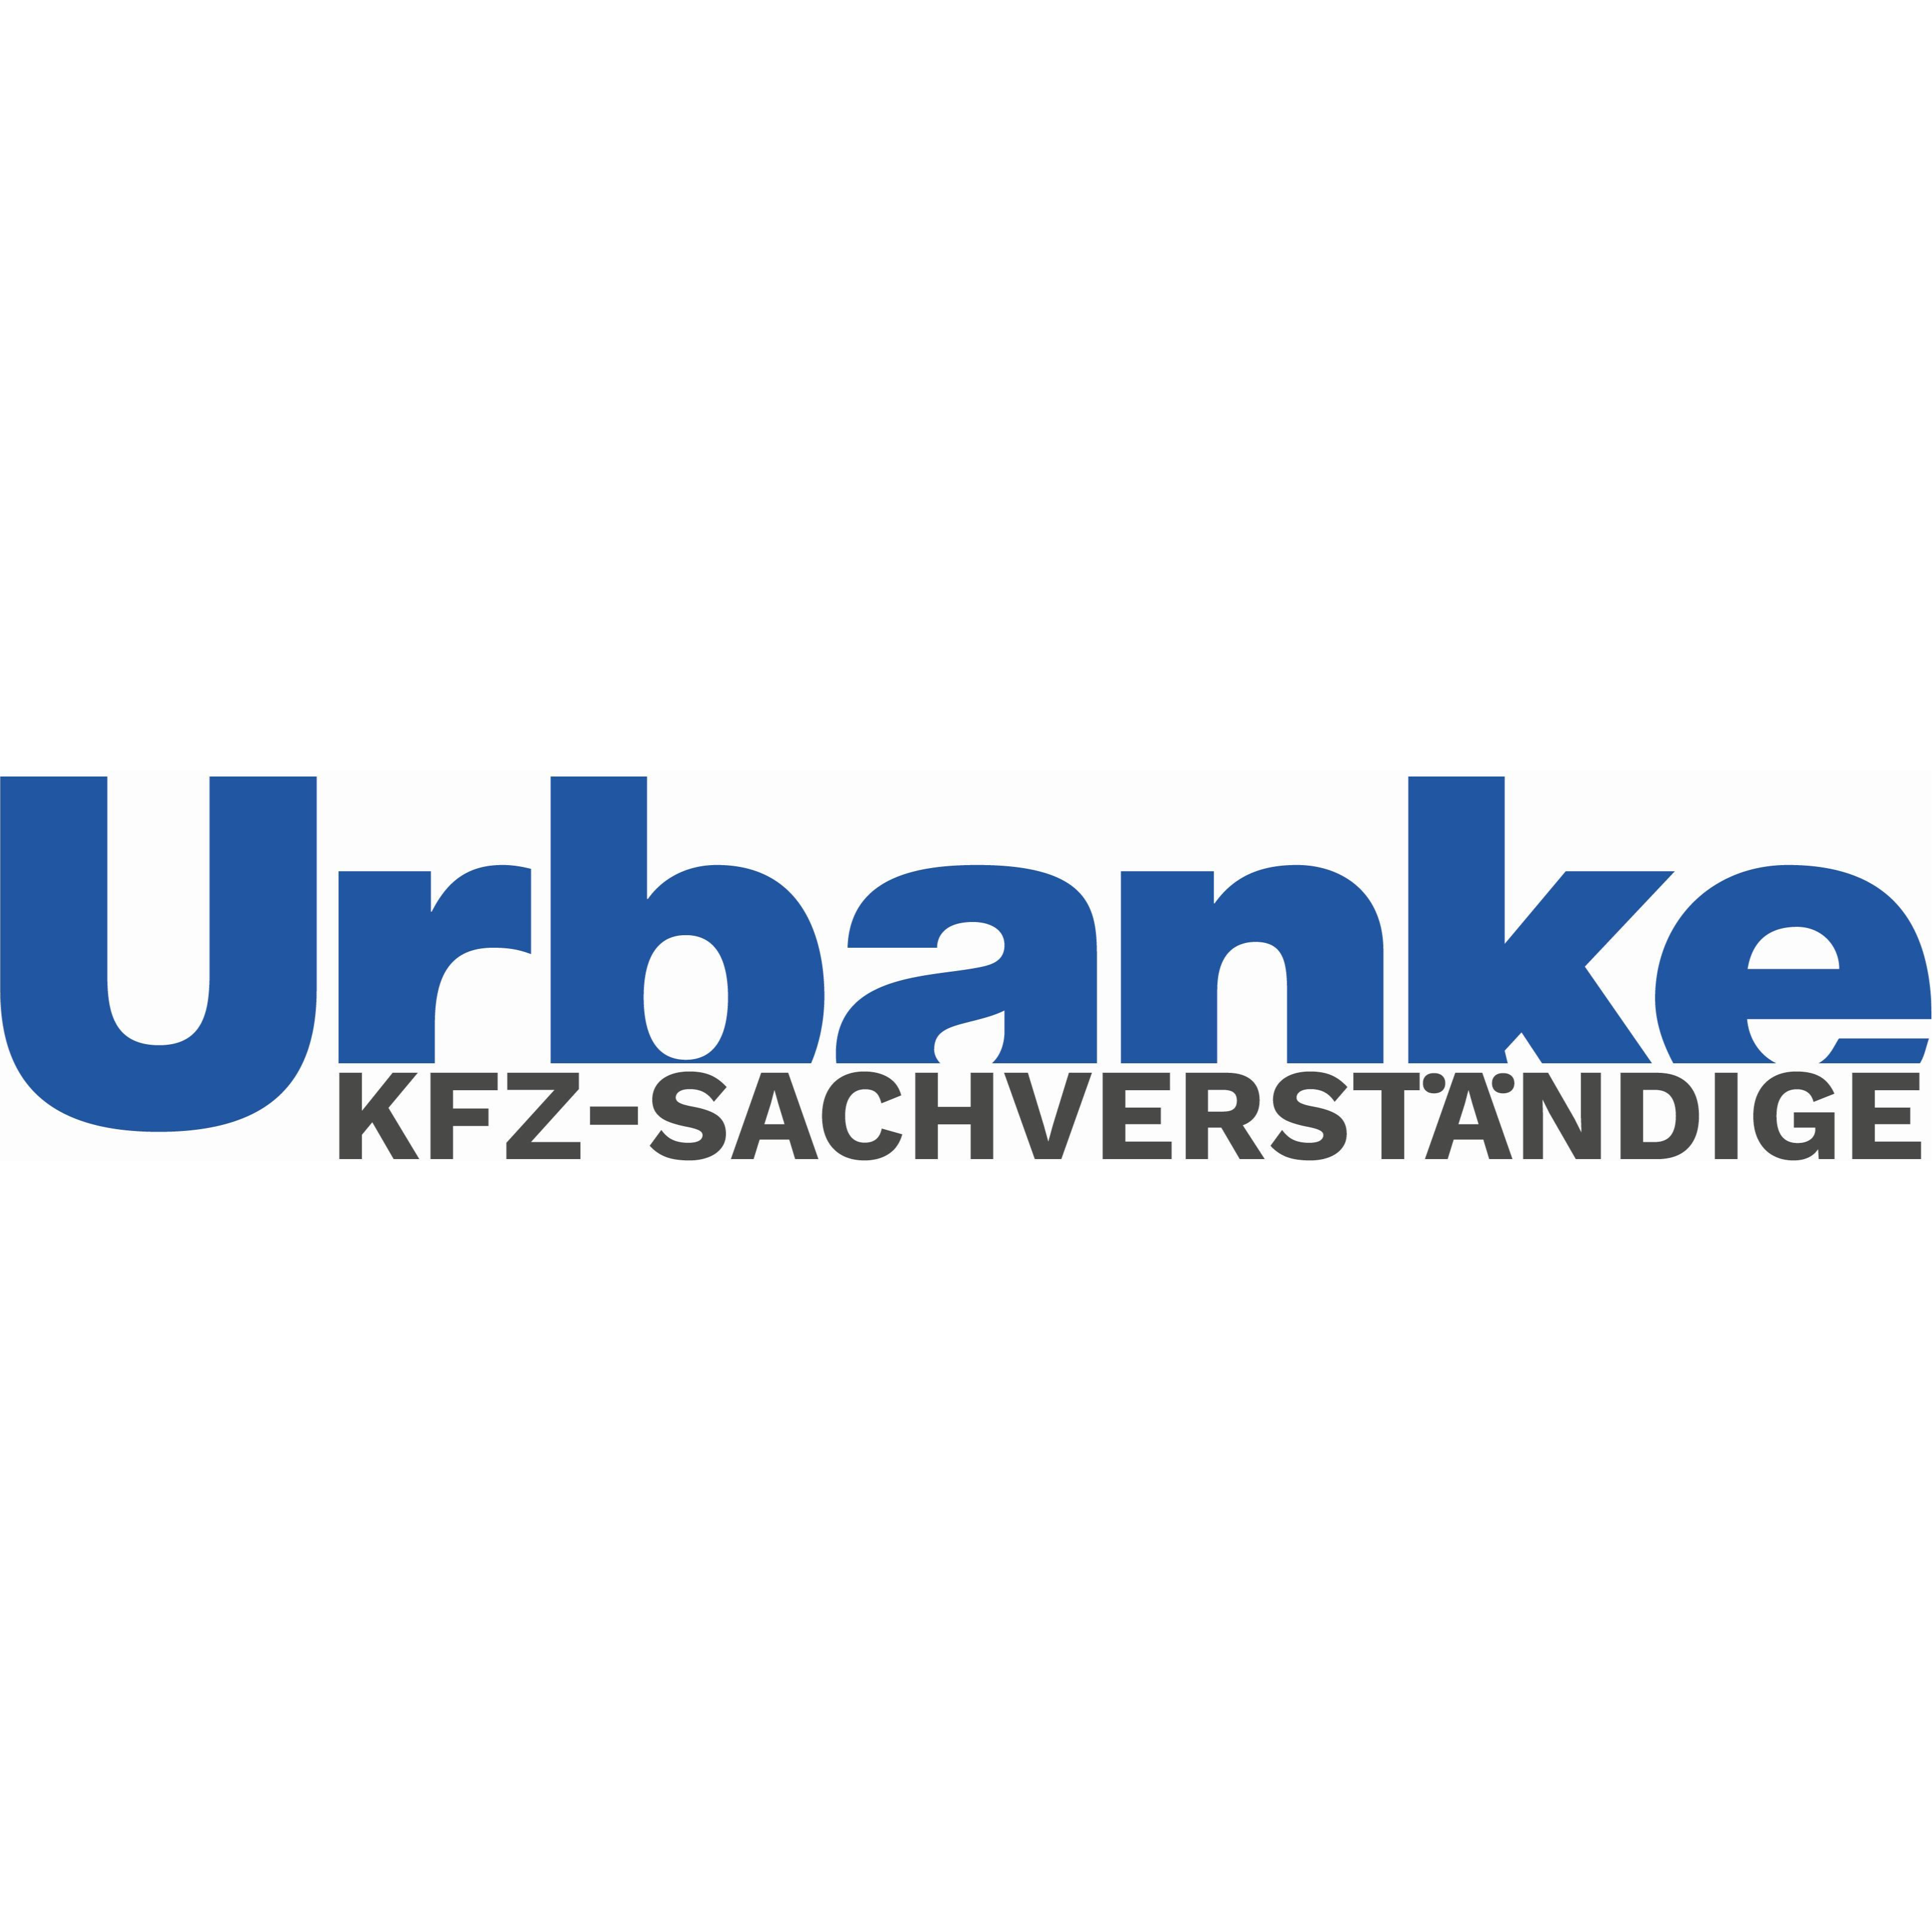 Kfz-Sachverständige Urbanke & Partner in Berlin - Logo